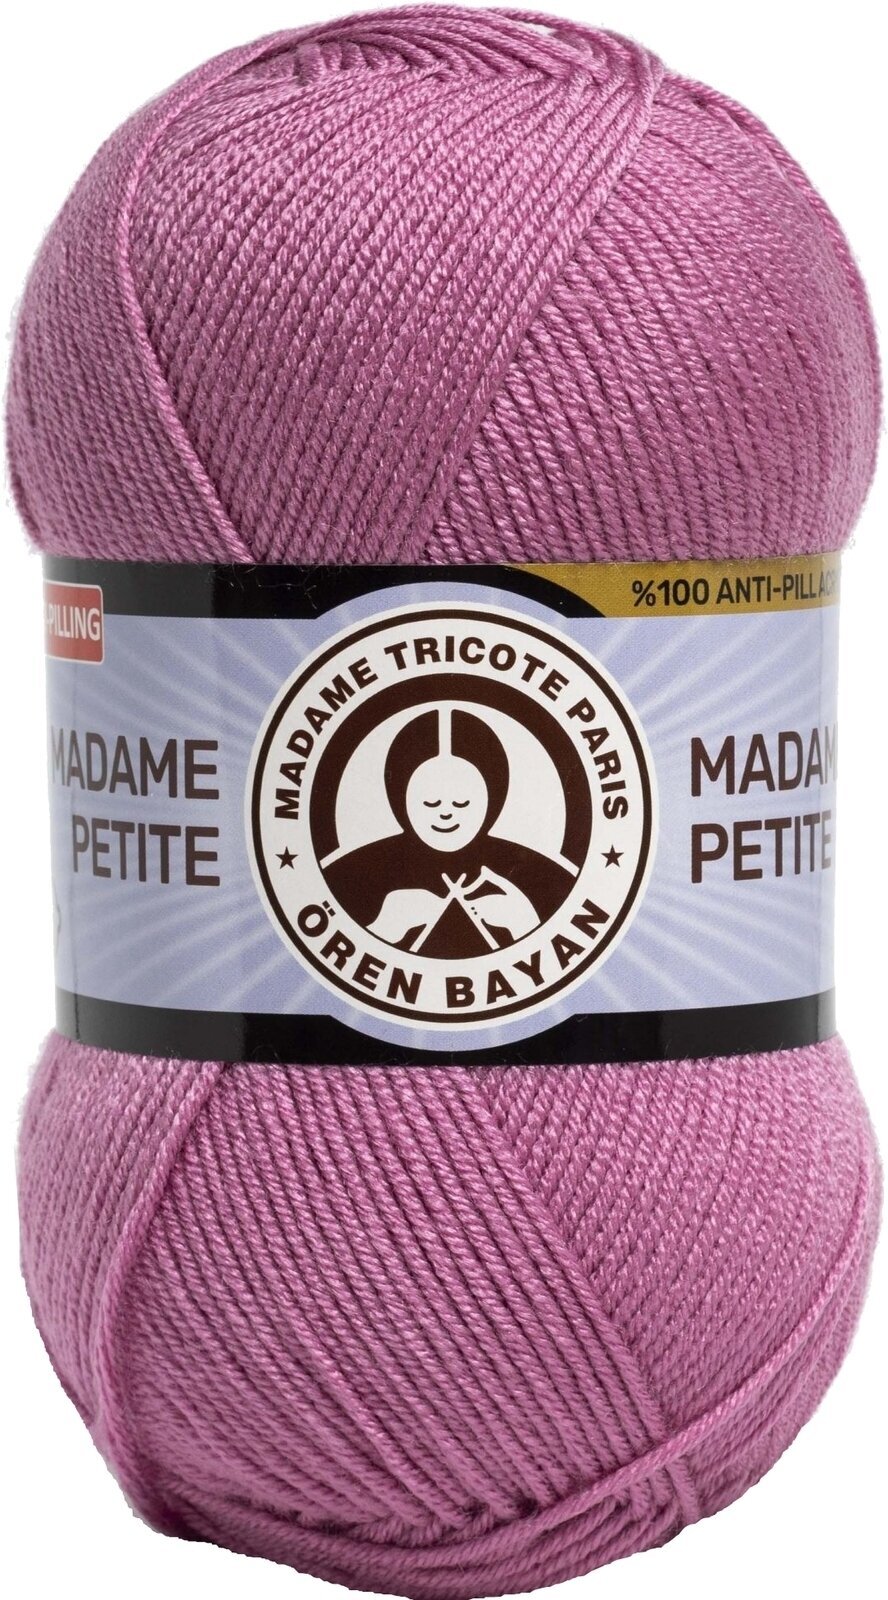 Breigaren Madame Tricote Paris Madame Petite 3848 49 Breigaren